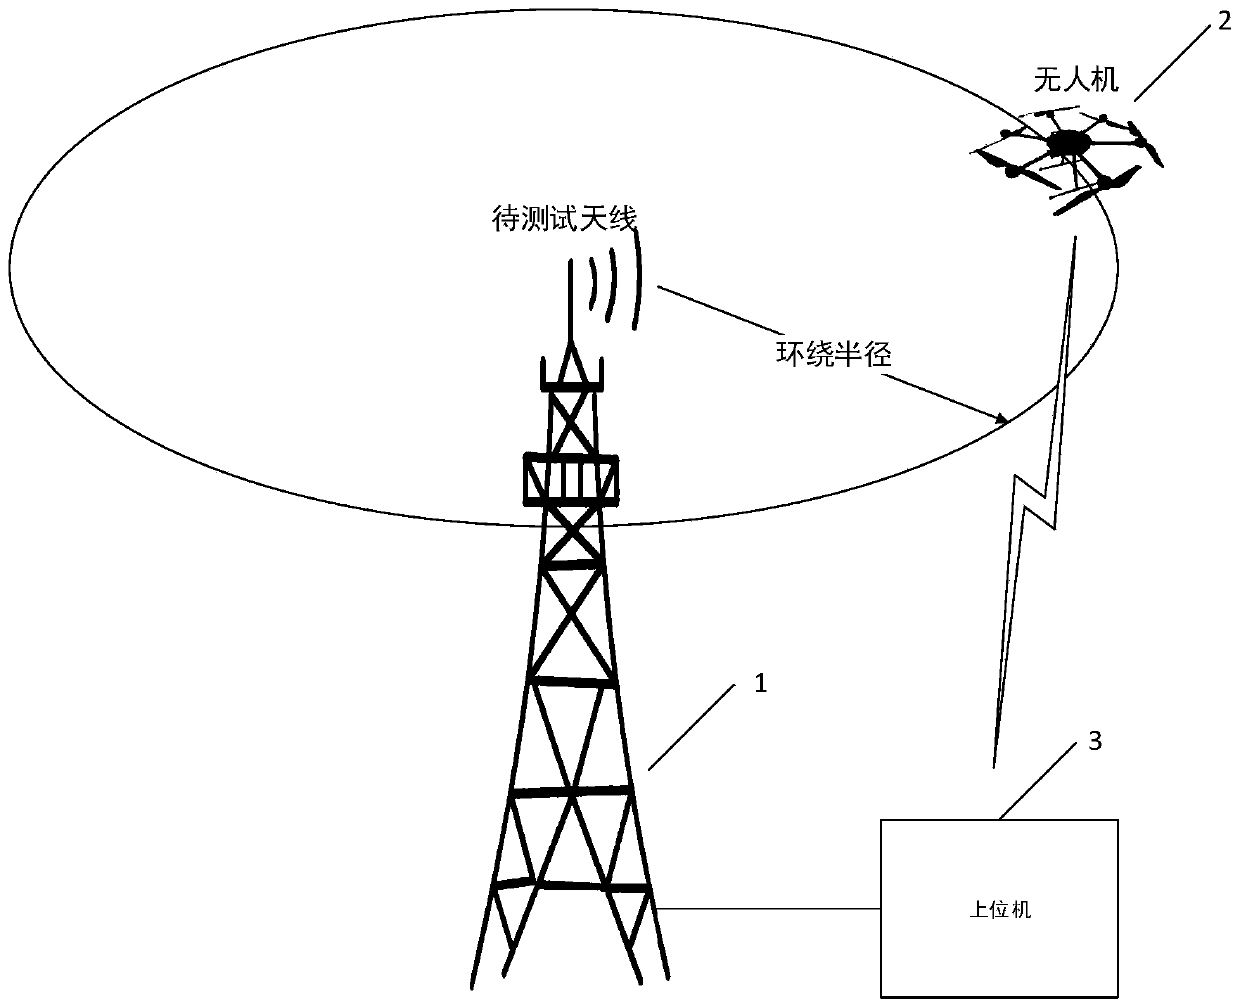 External field antenna test system and external field antenna test method